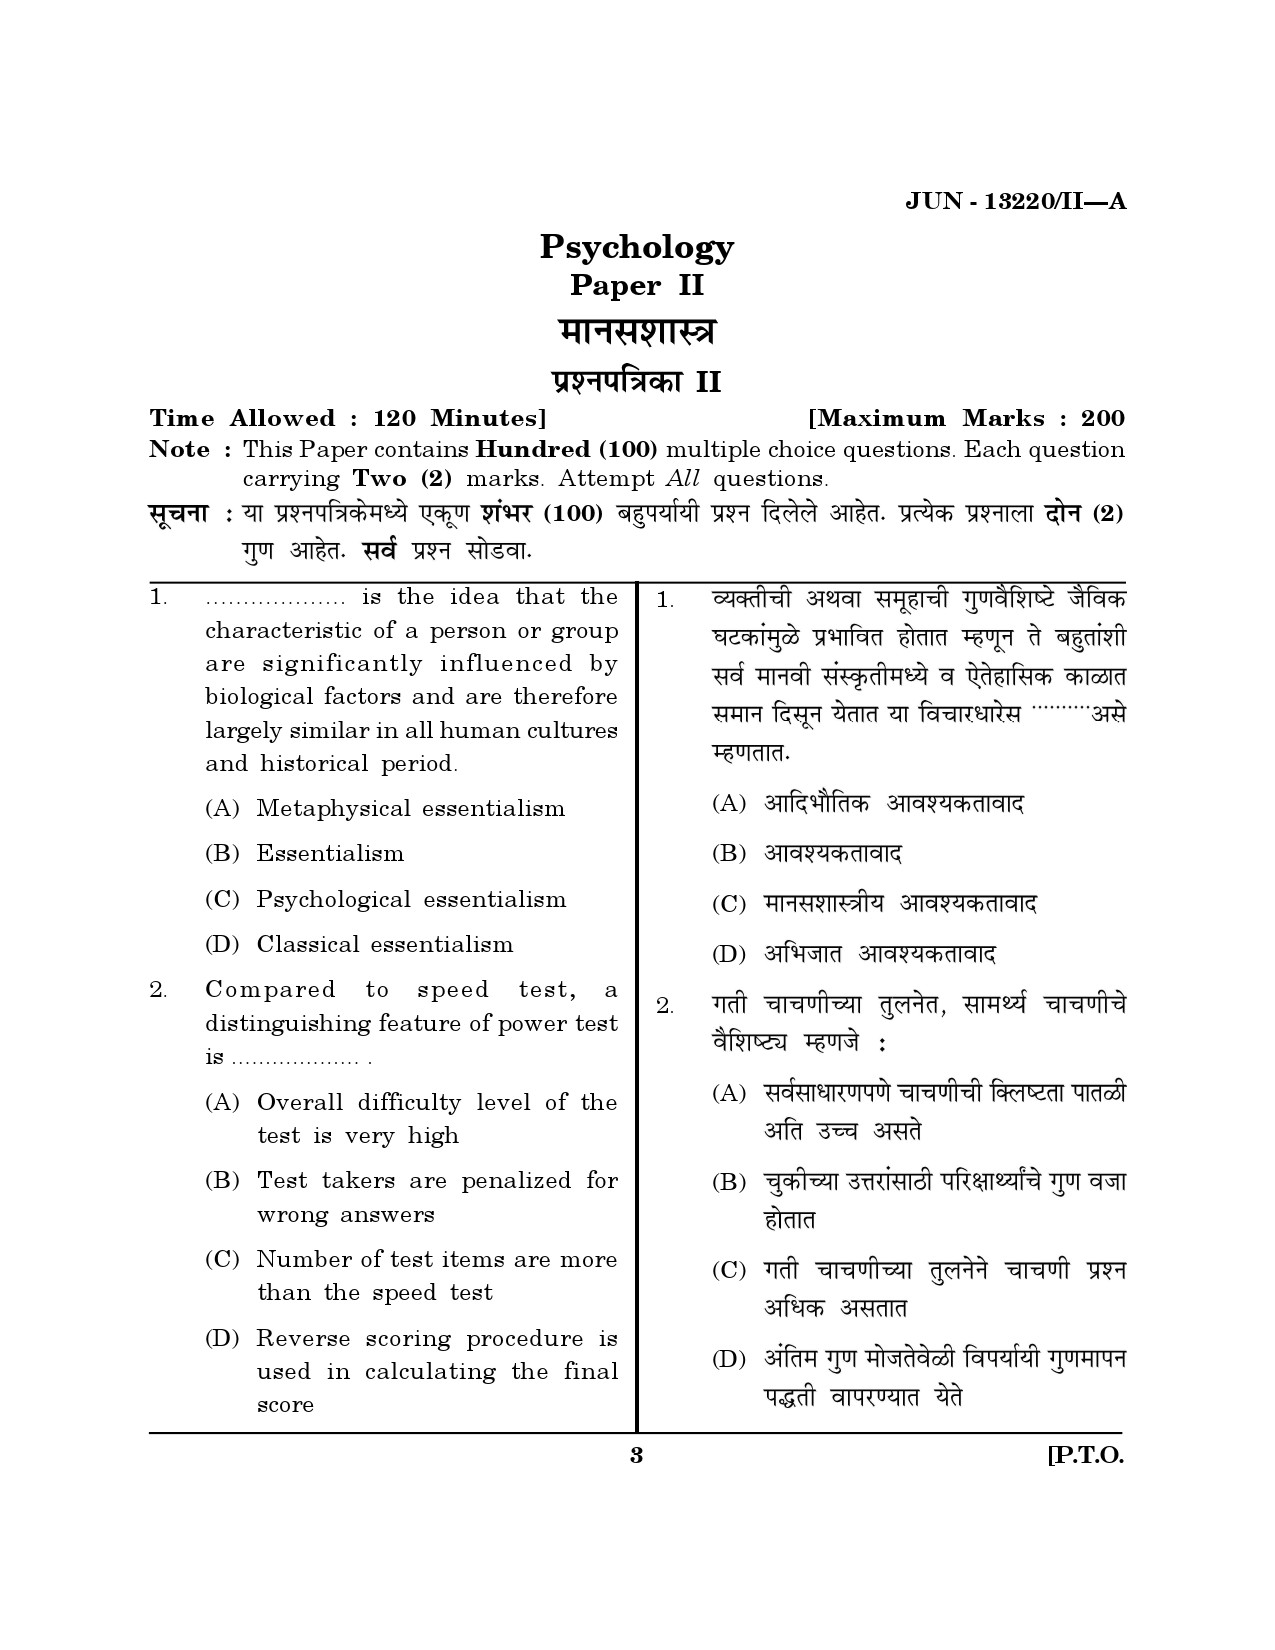 Maharashtra SET Psychology Question Paper II June 2020 2